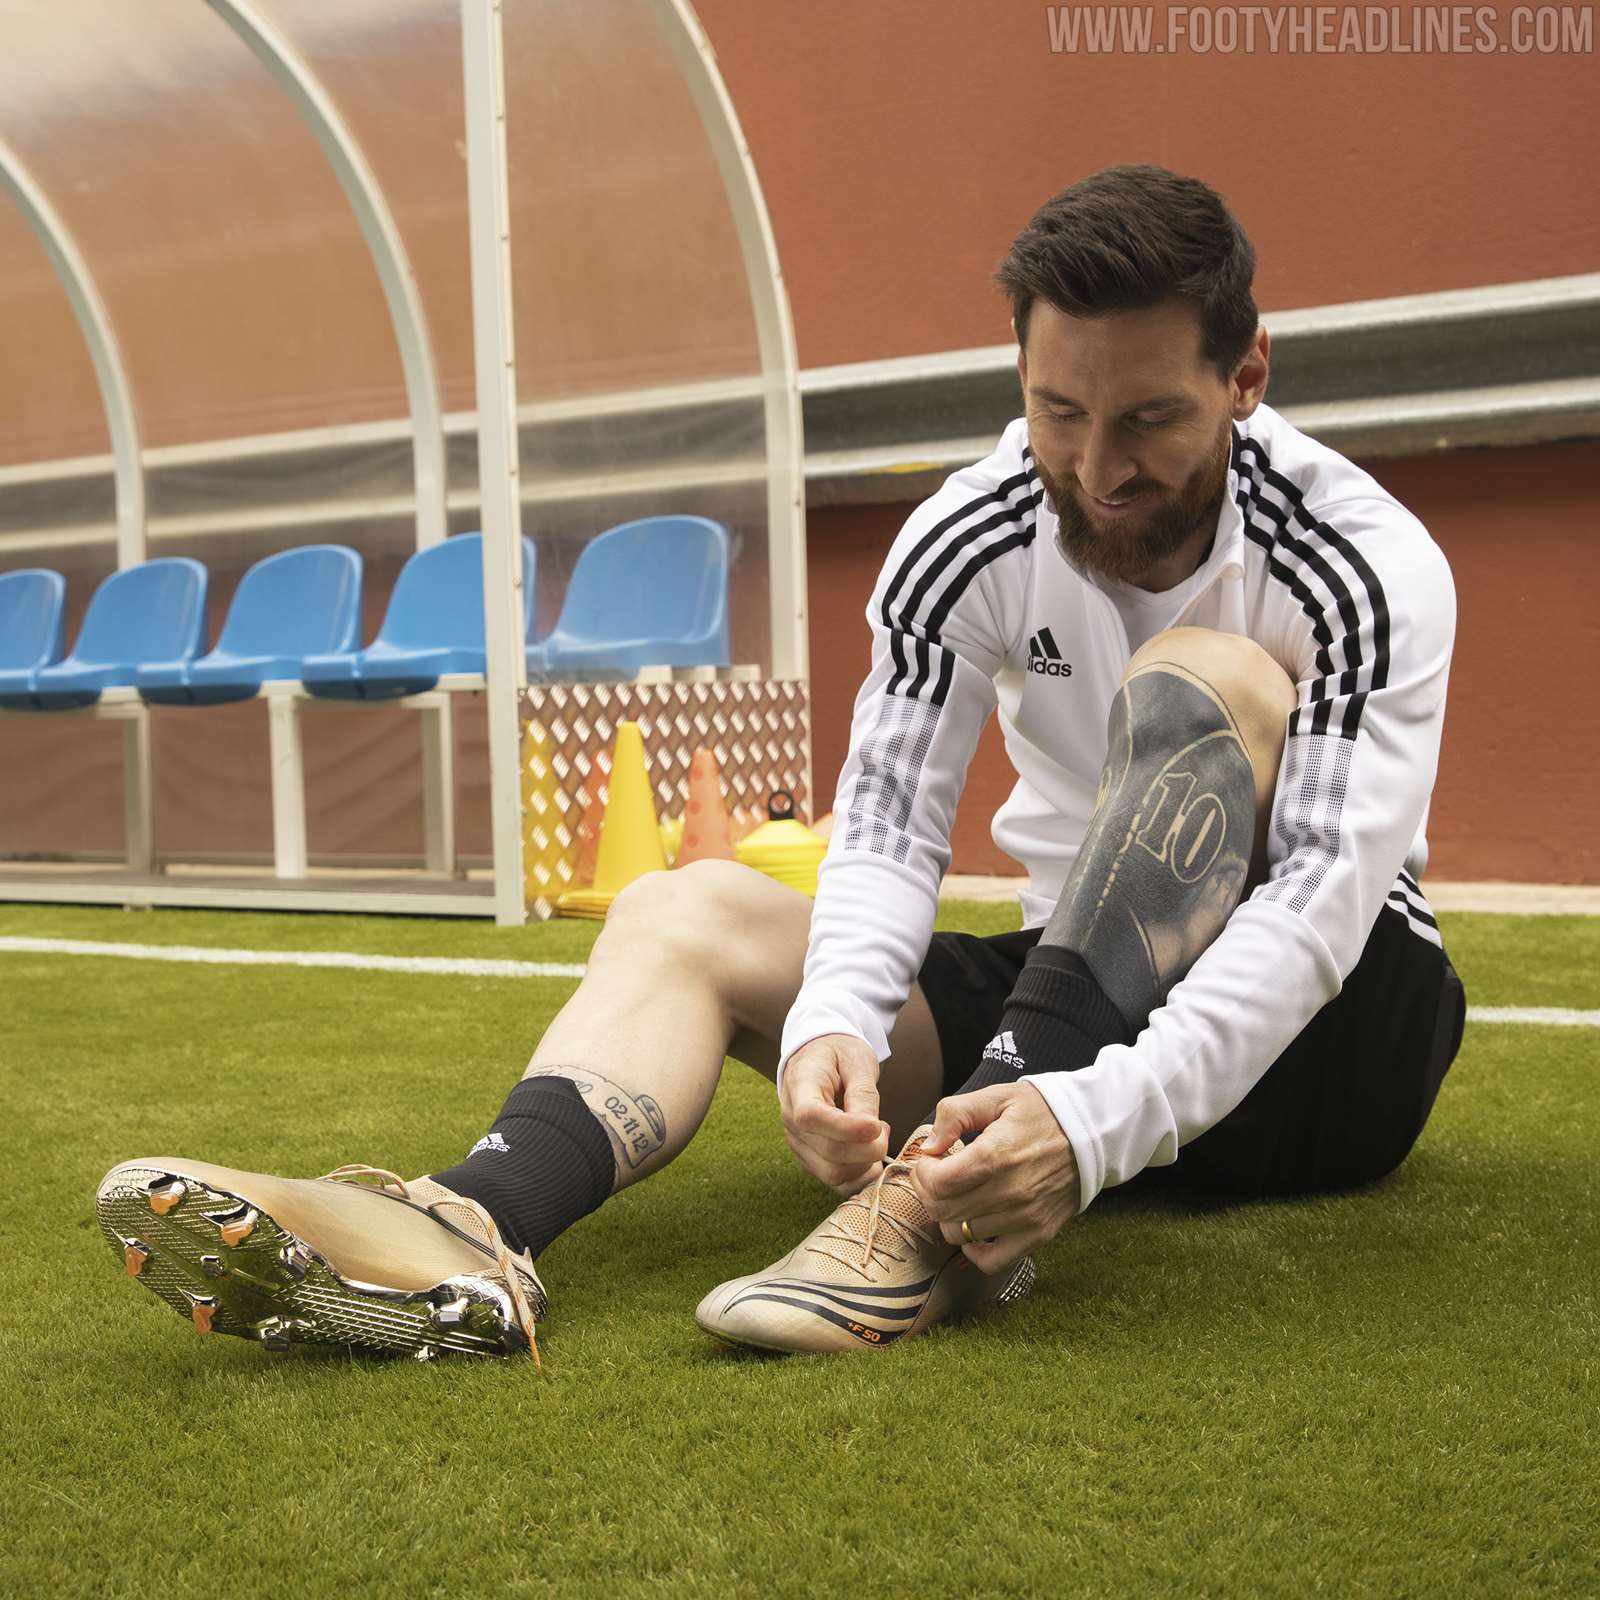 Adidas Messi Retorno" Limited-Edition Boots - Footy Headlines